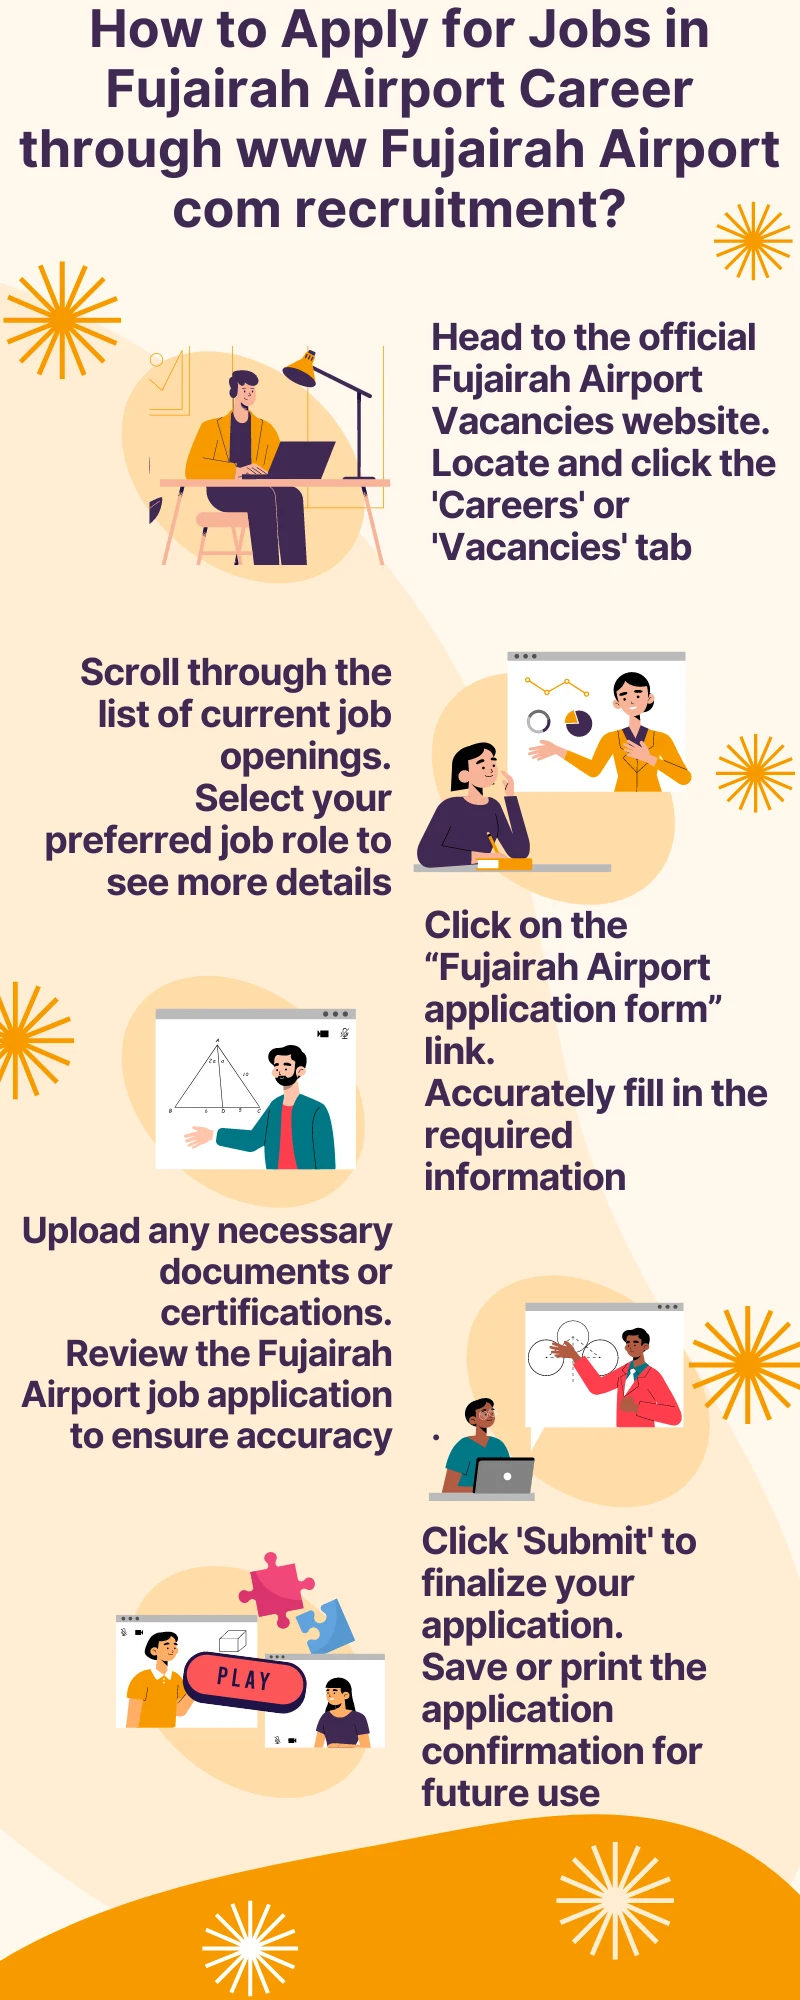 How to Apply for Jobs in Fujairah Airport Career through www Fujairah Airport com recruitment?